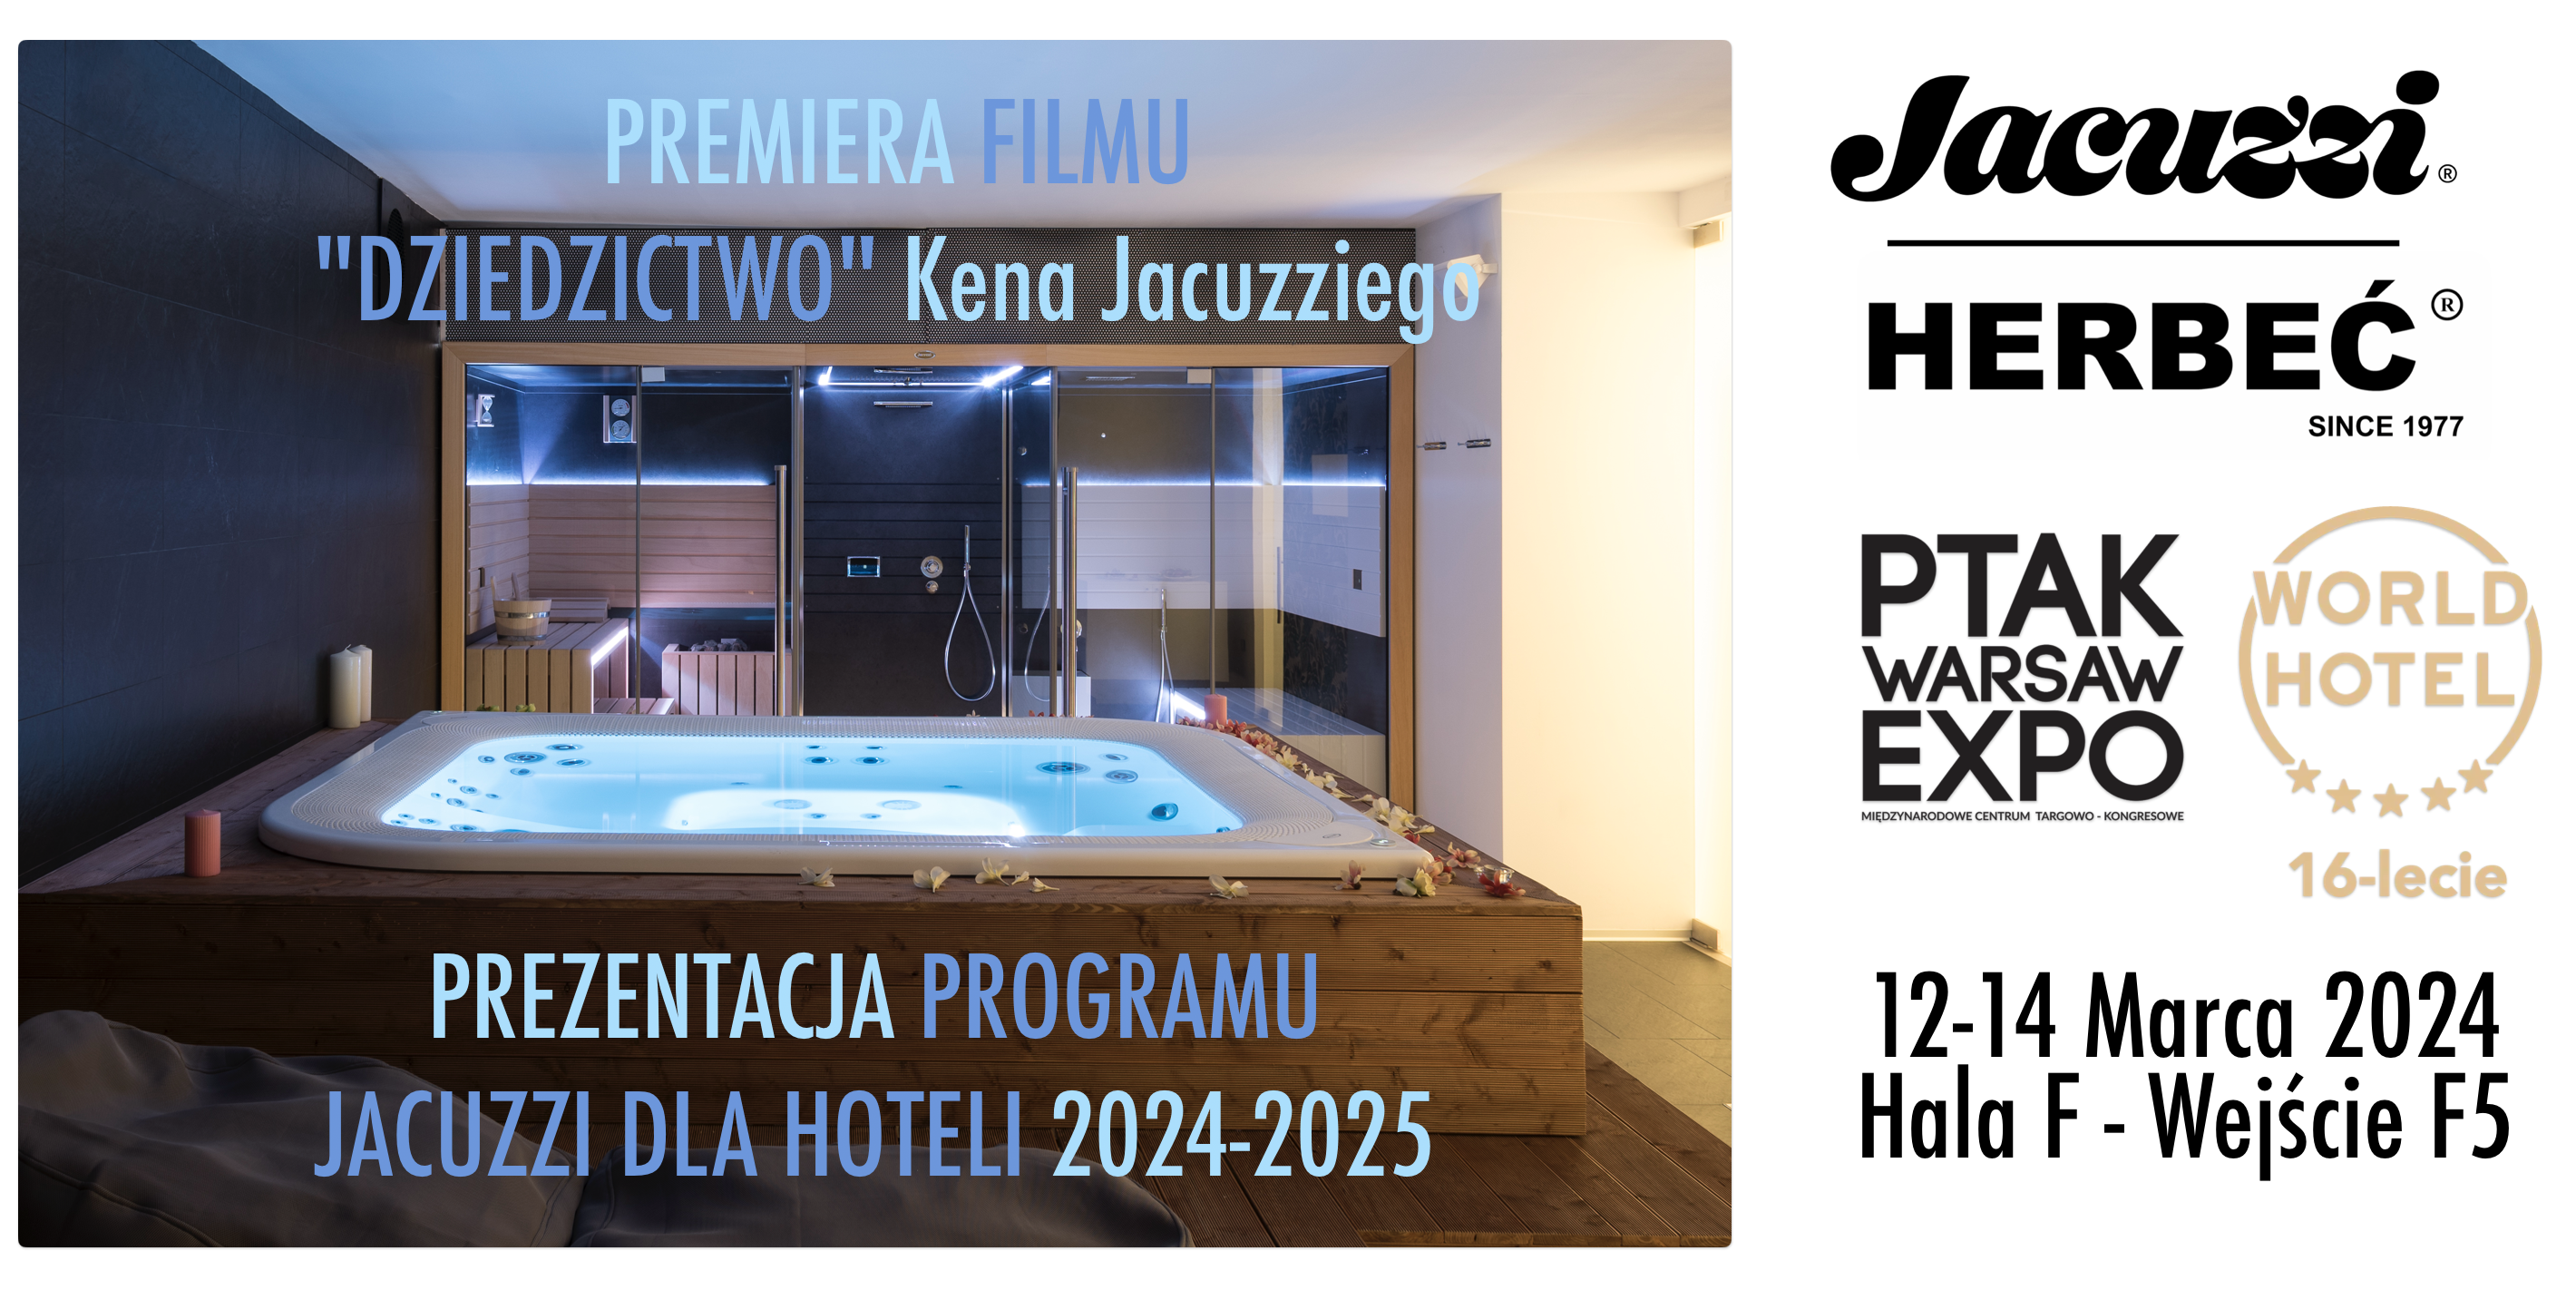 Targi World Hotel Jacuzzi Herbec 2024 Marzec 12-14 marca